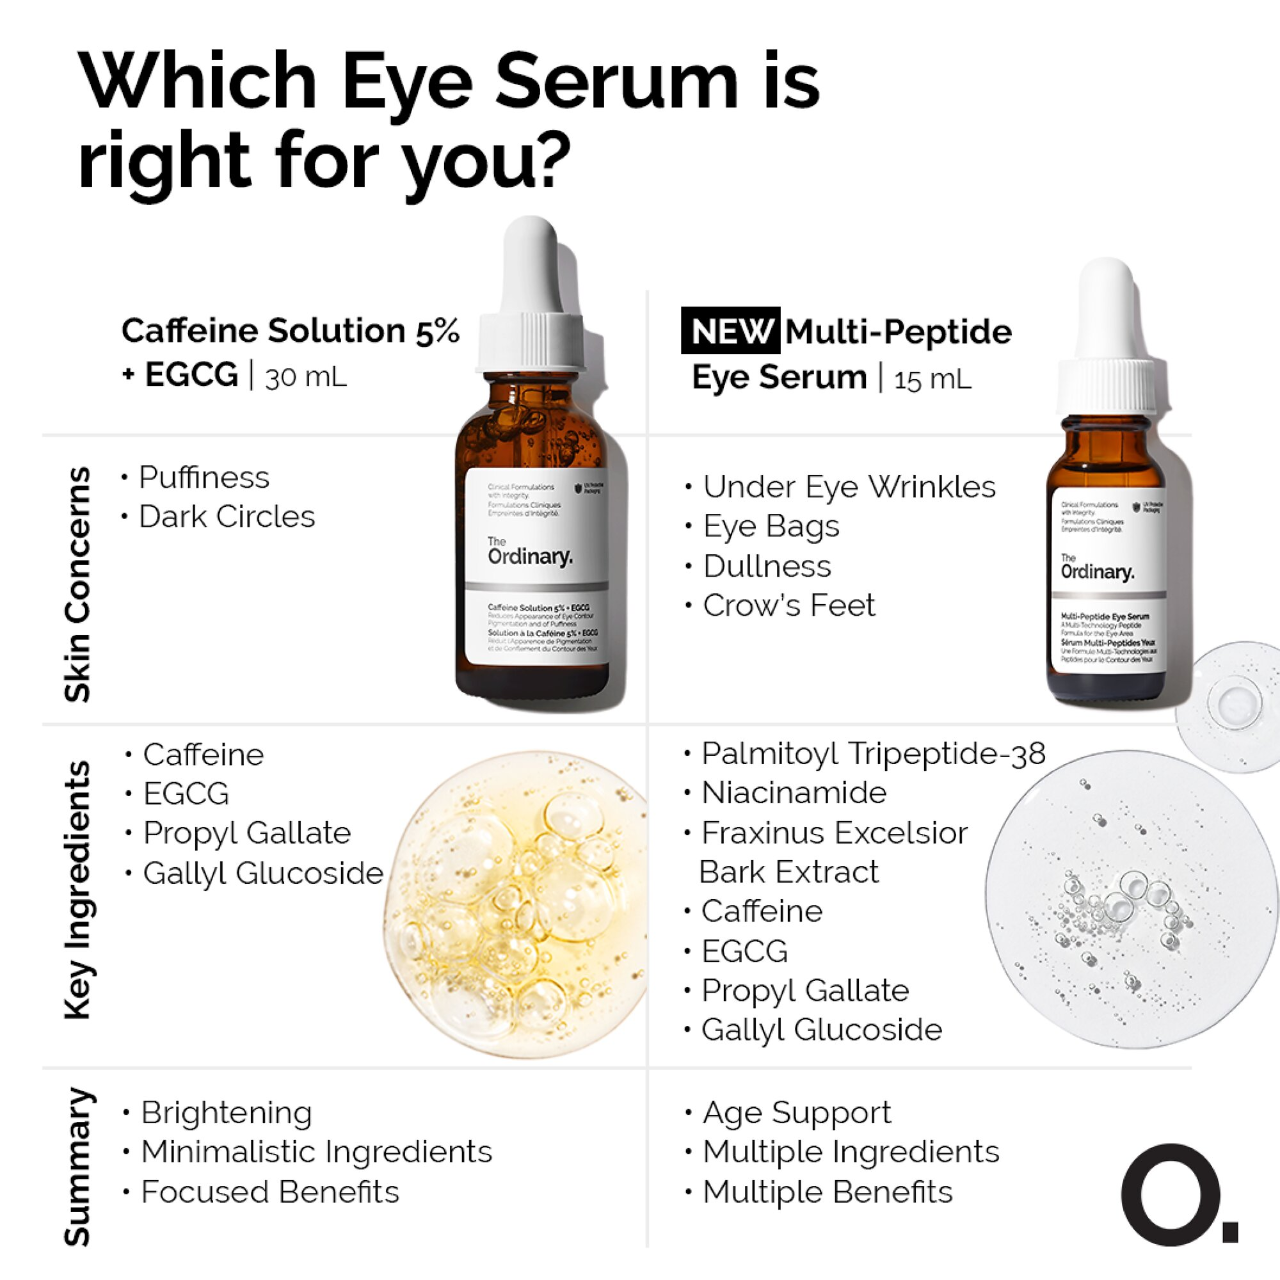 copy-of-the-ordinary-multi-peptide-eye-serum-15ml